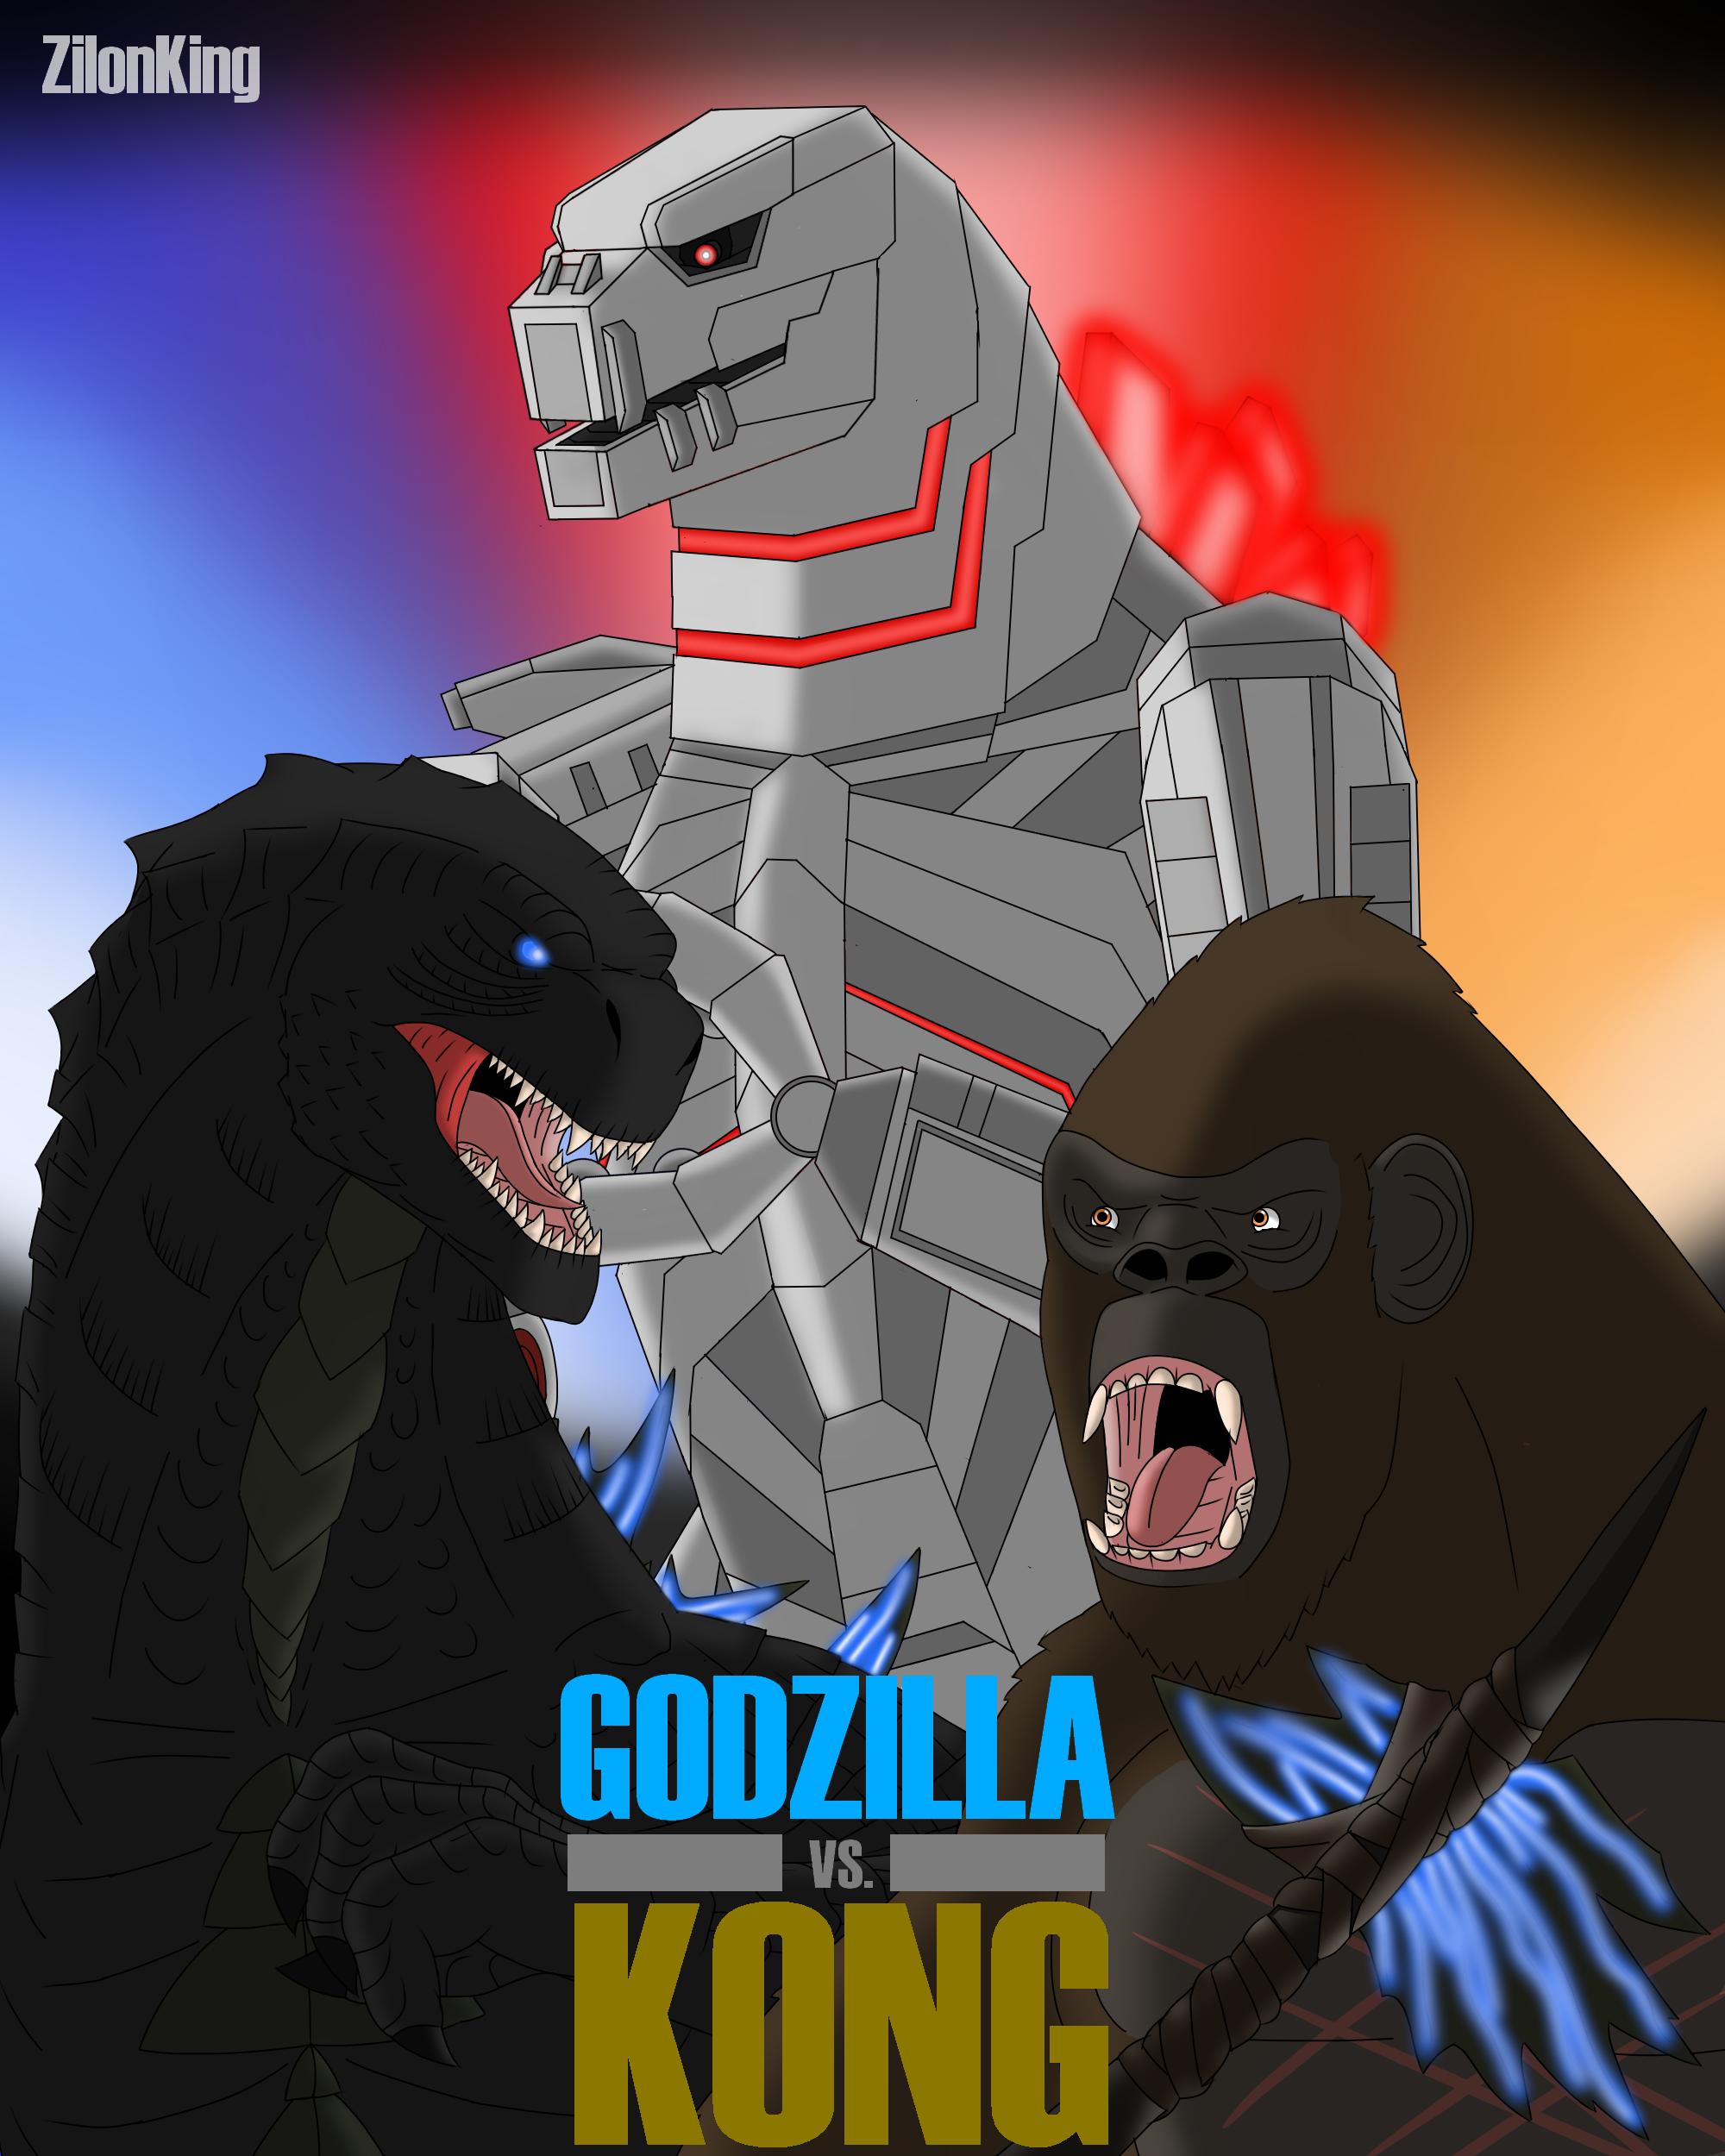 Godzilla vs Kong (Poster Art) by ZilonKing on DeviantArt